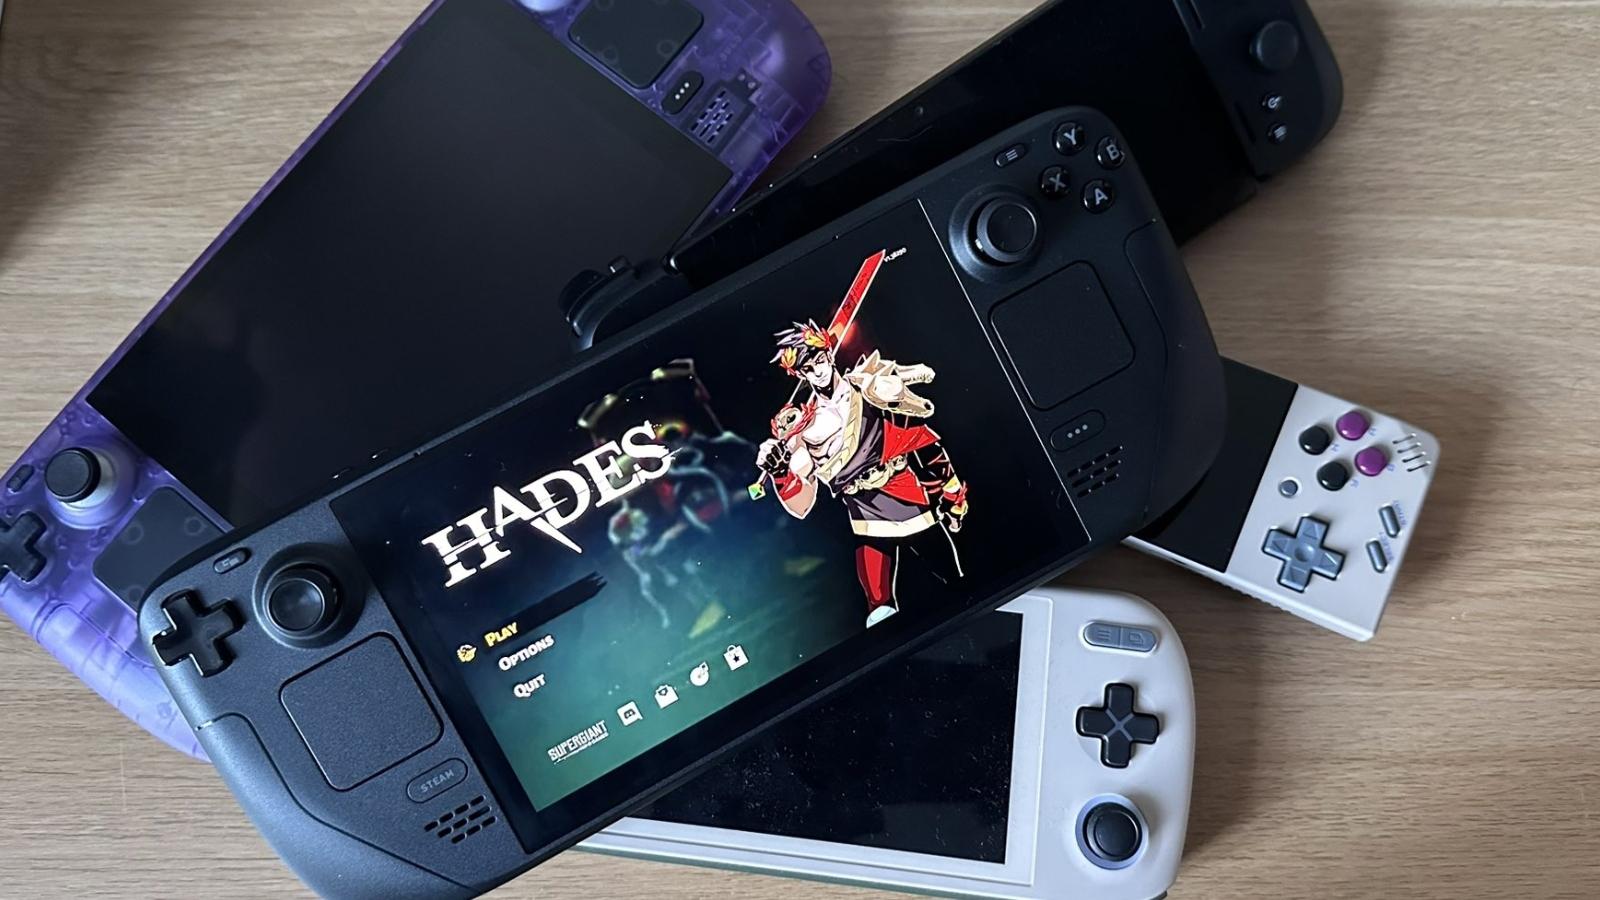 Hades' Star no Steam